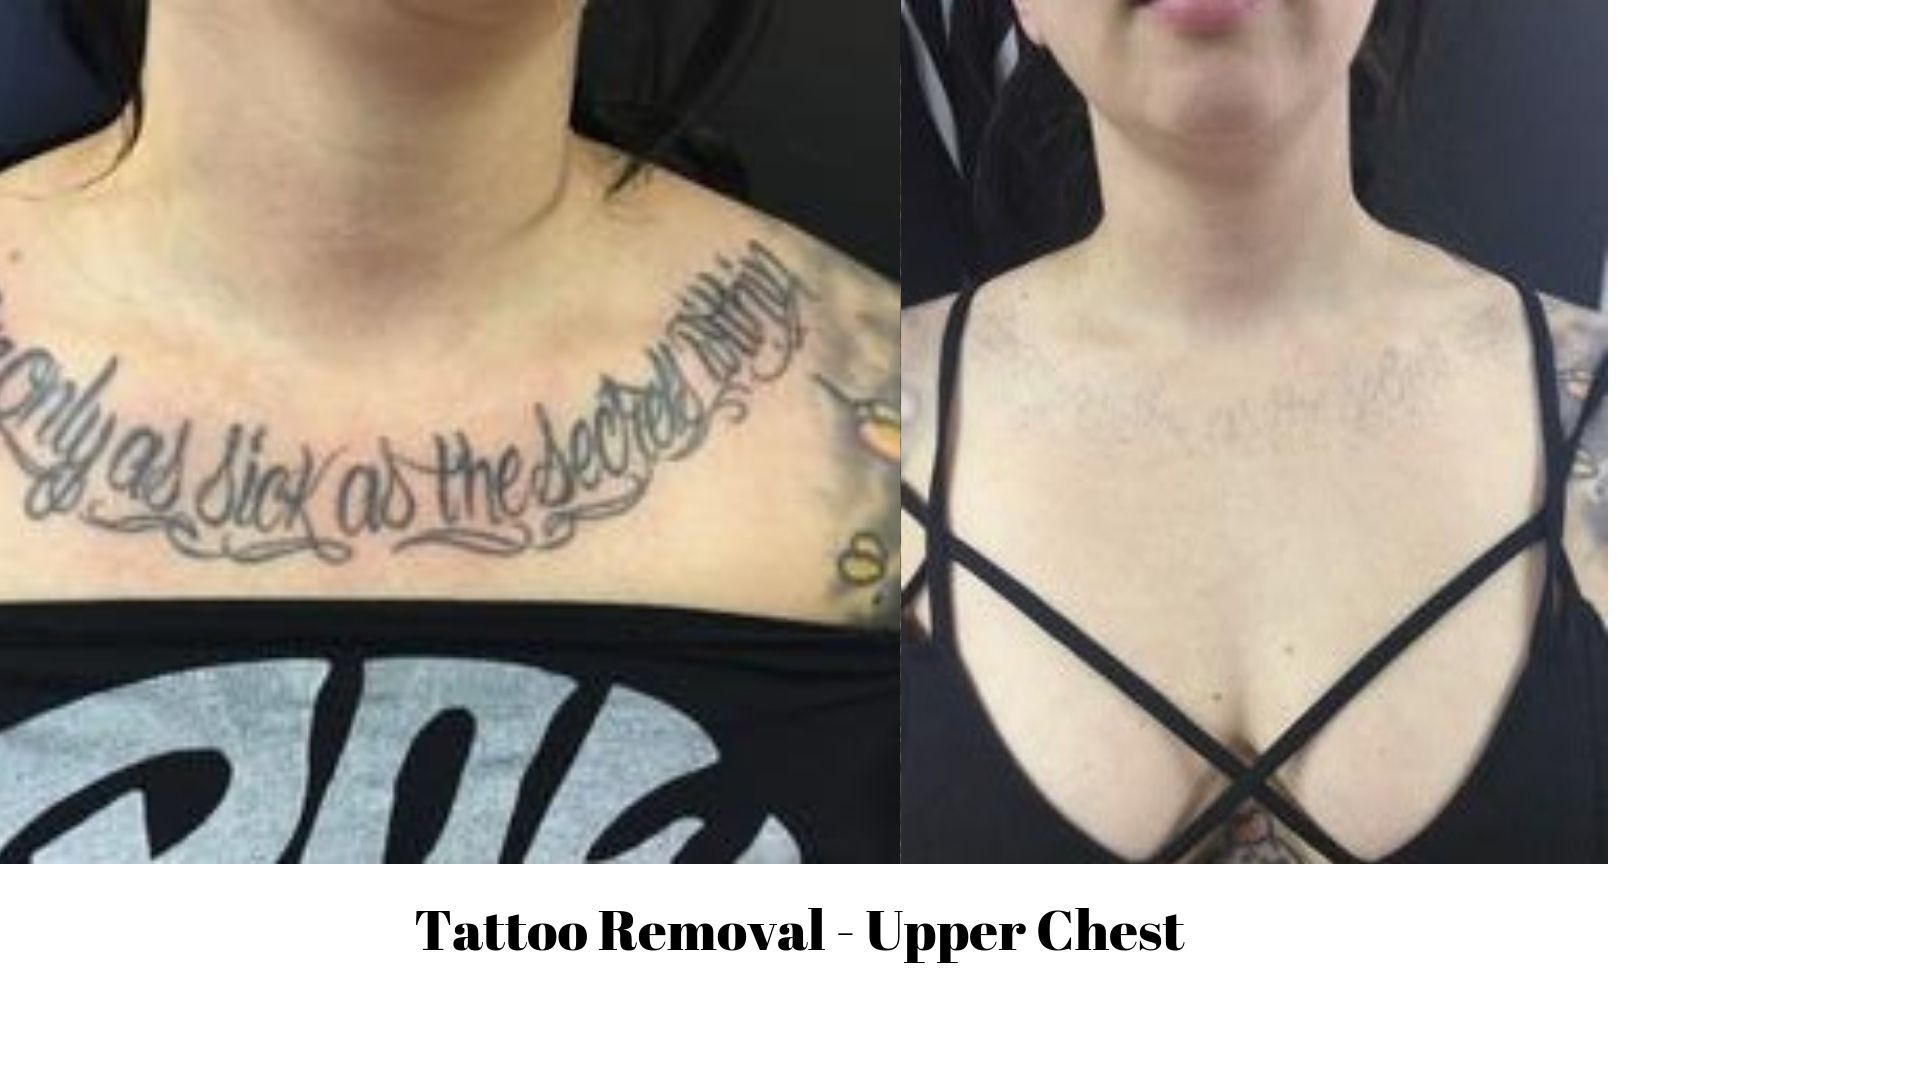 Adelaides 1 Laser Tattoo Removal Blog  LaserTat